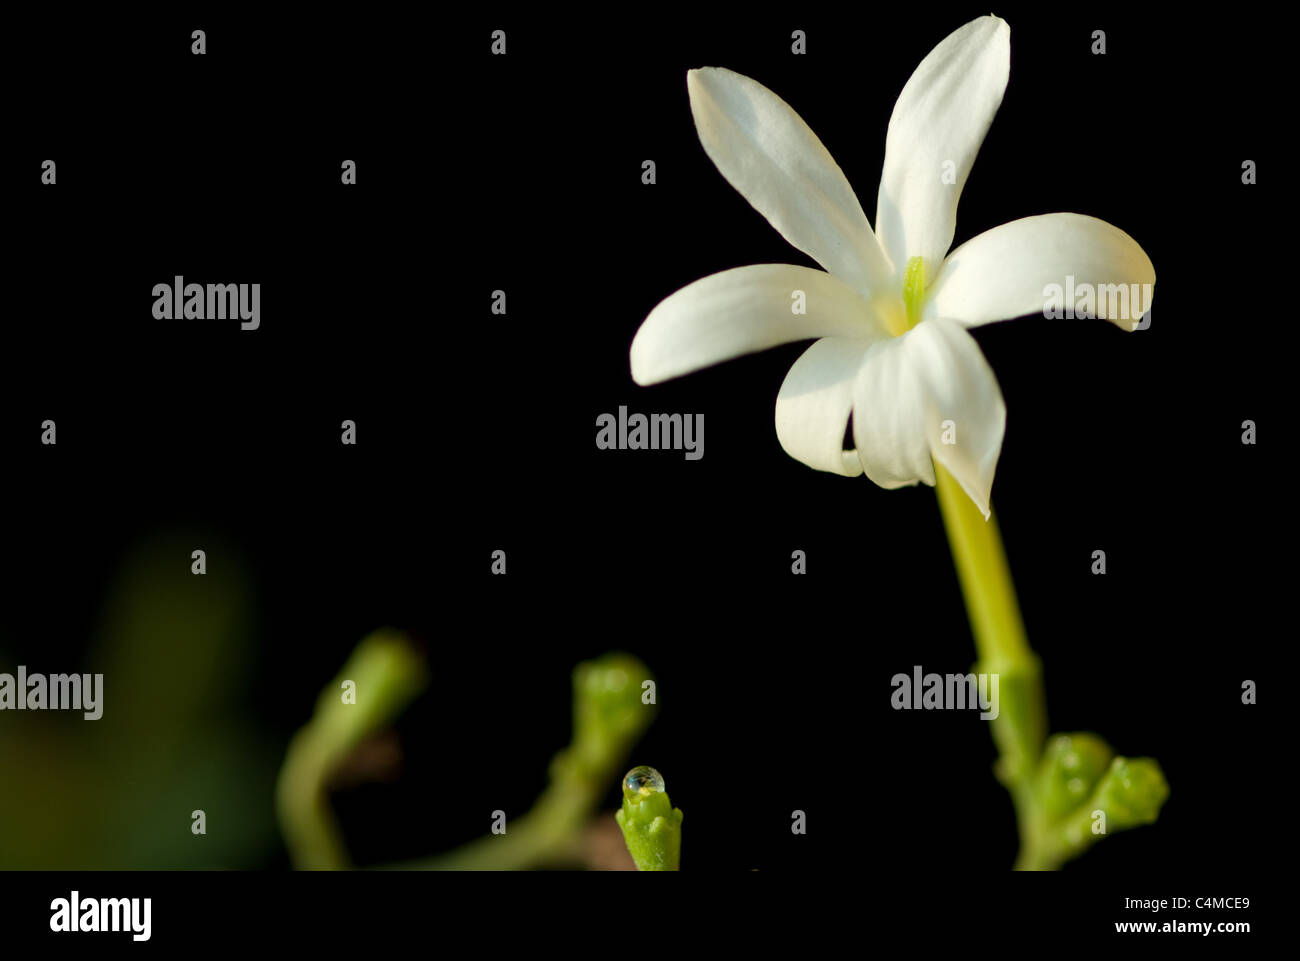 Jasmine (Jasminum auriculatum) flower close-up Stock Photo